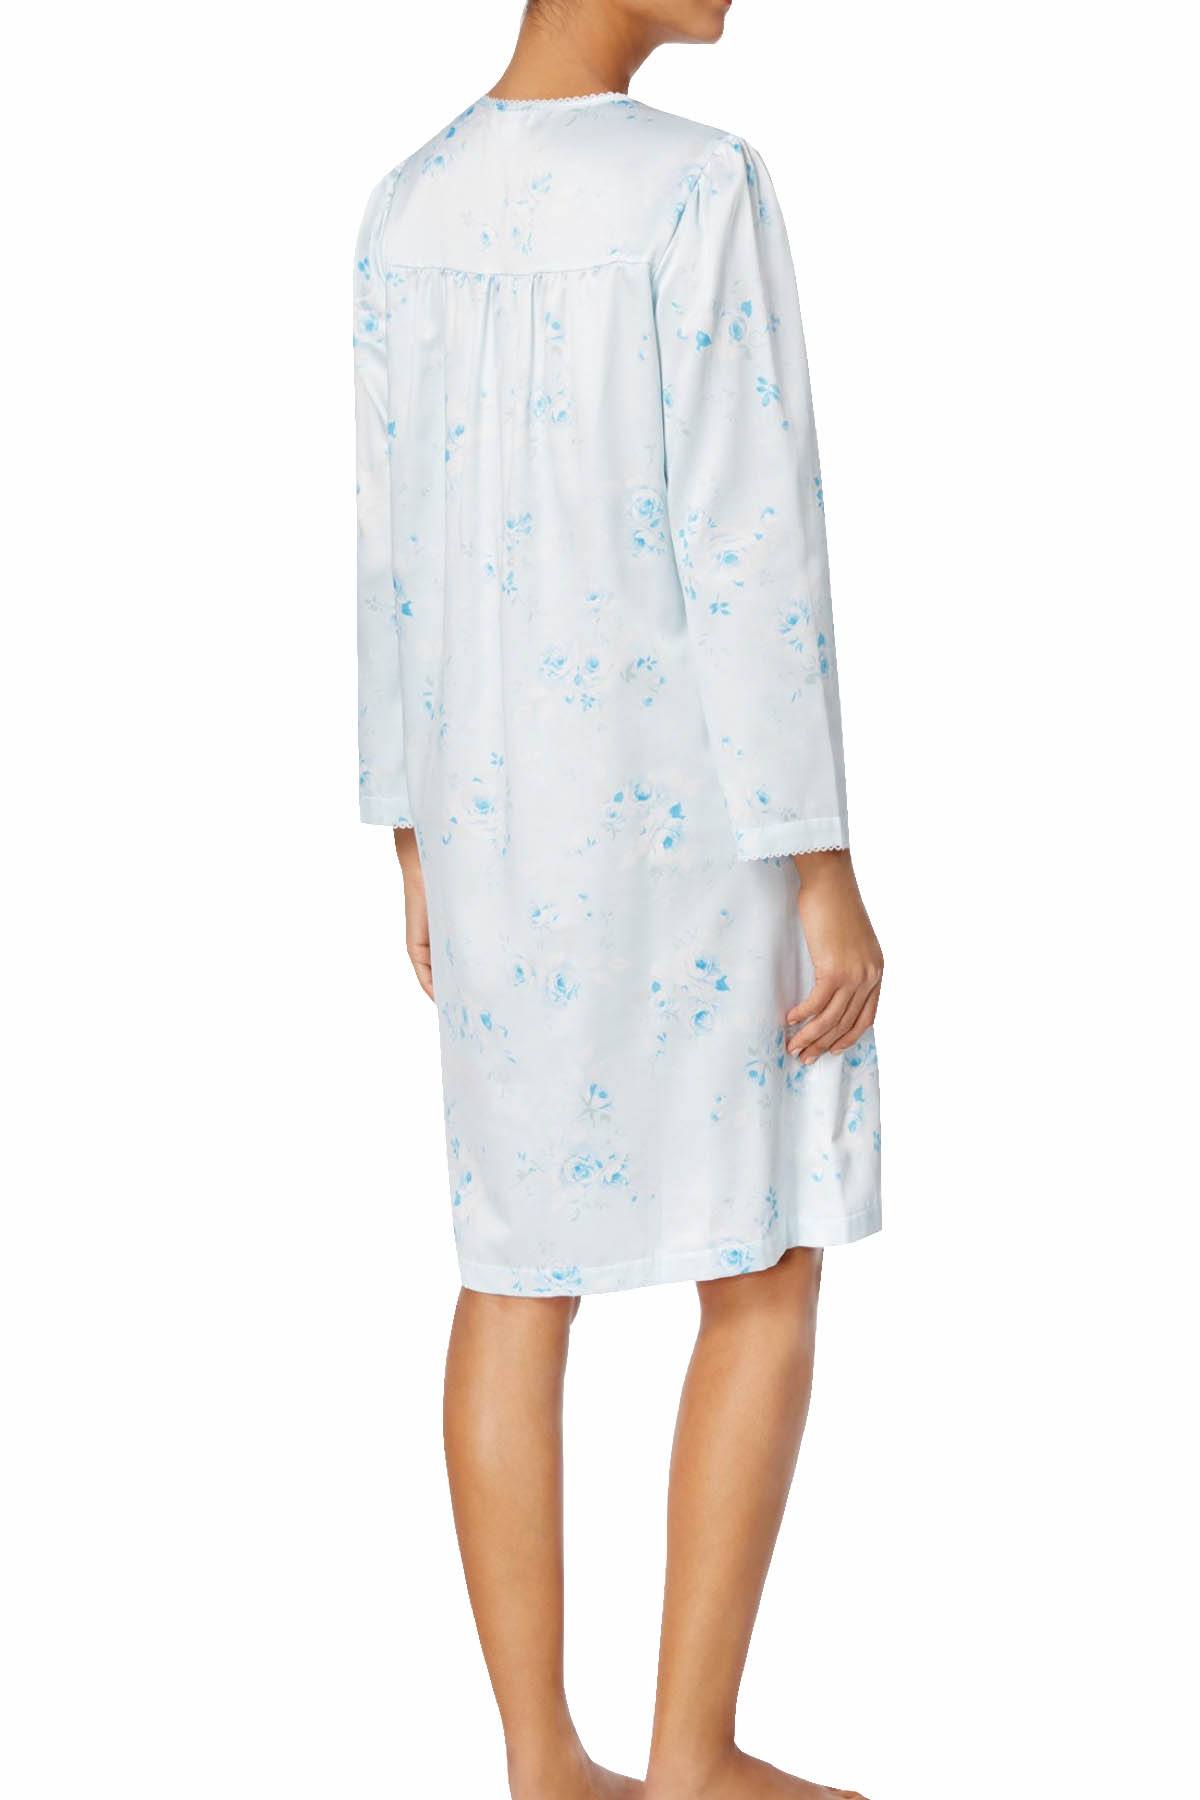 Miss Elaine Blue-Bouquet Brushed-Satin Lace-Trim Nightgown